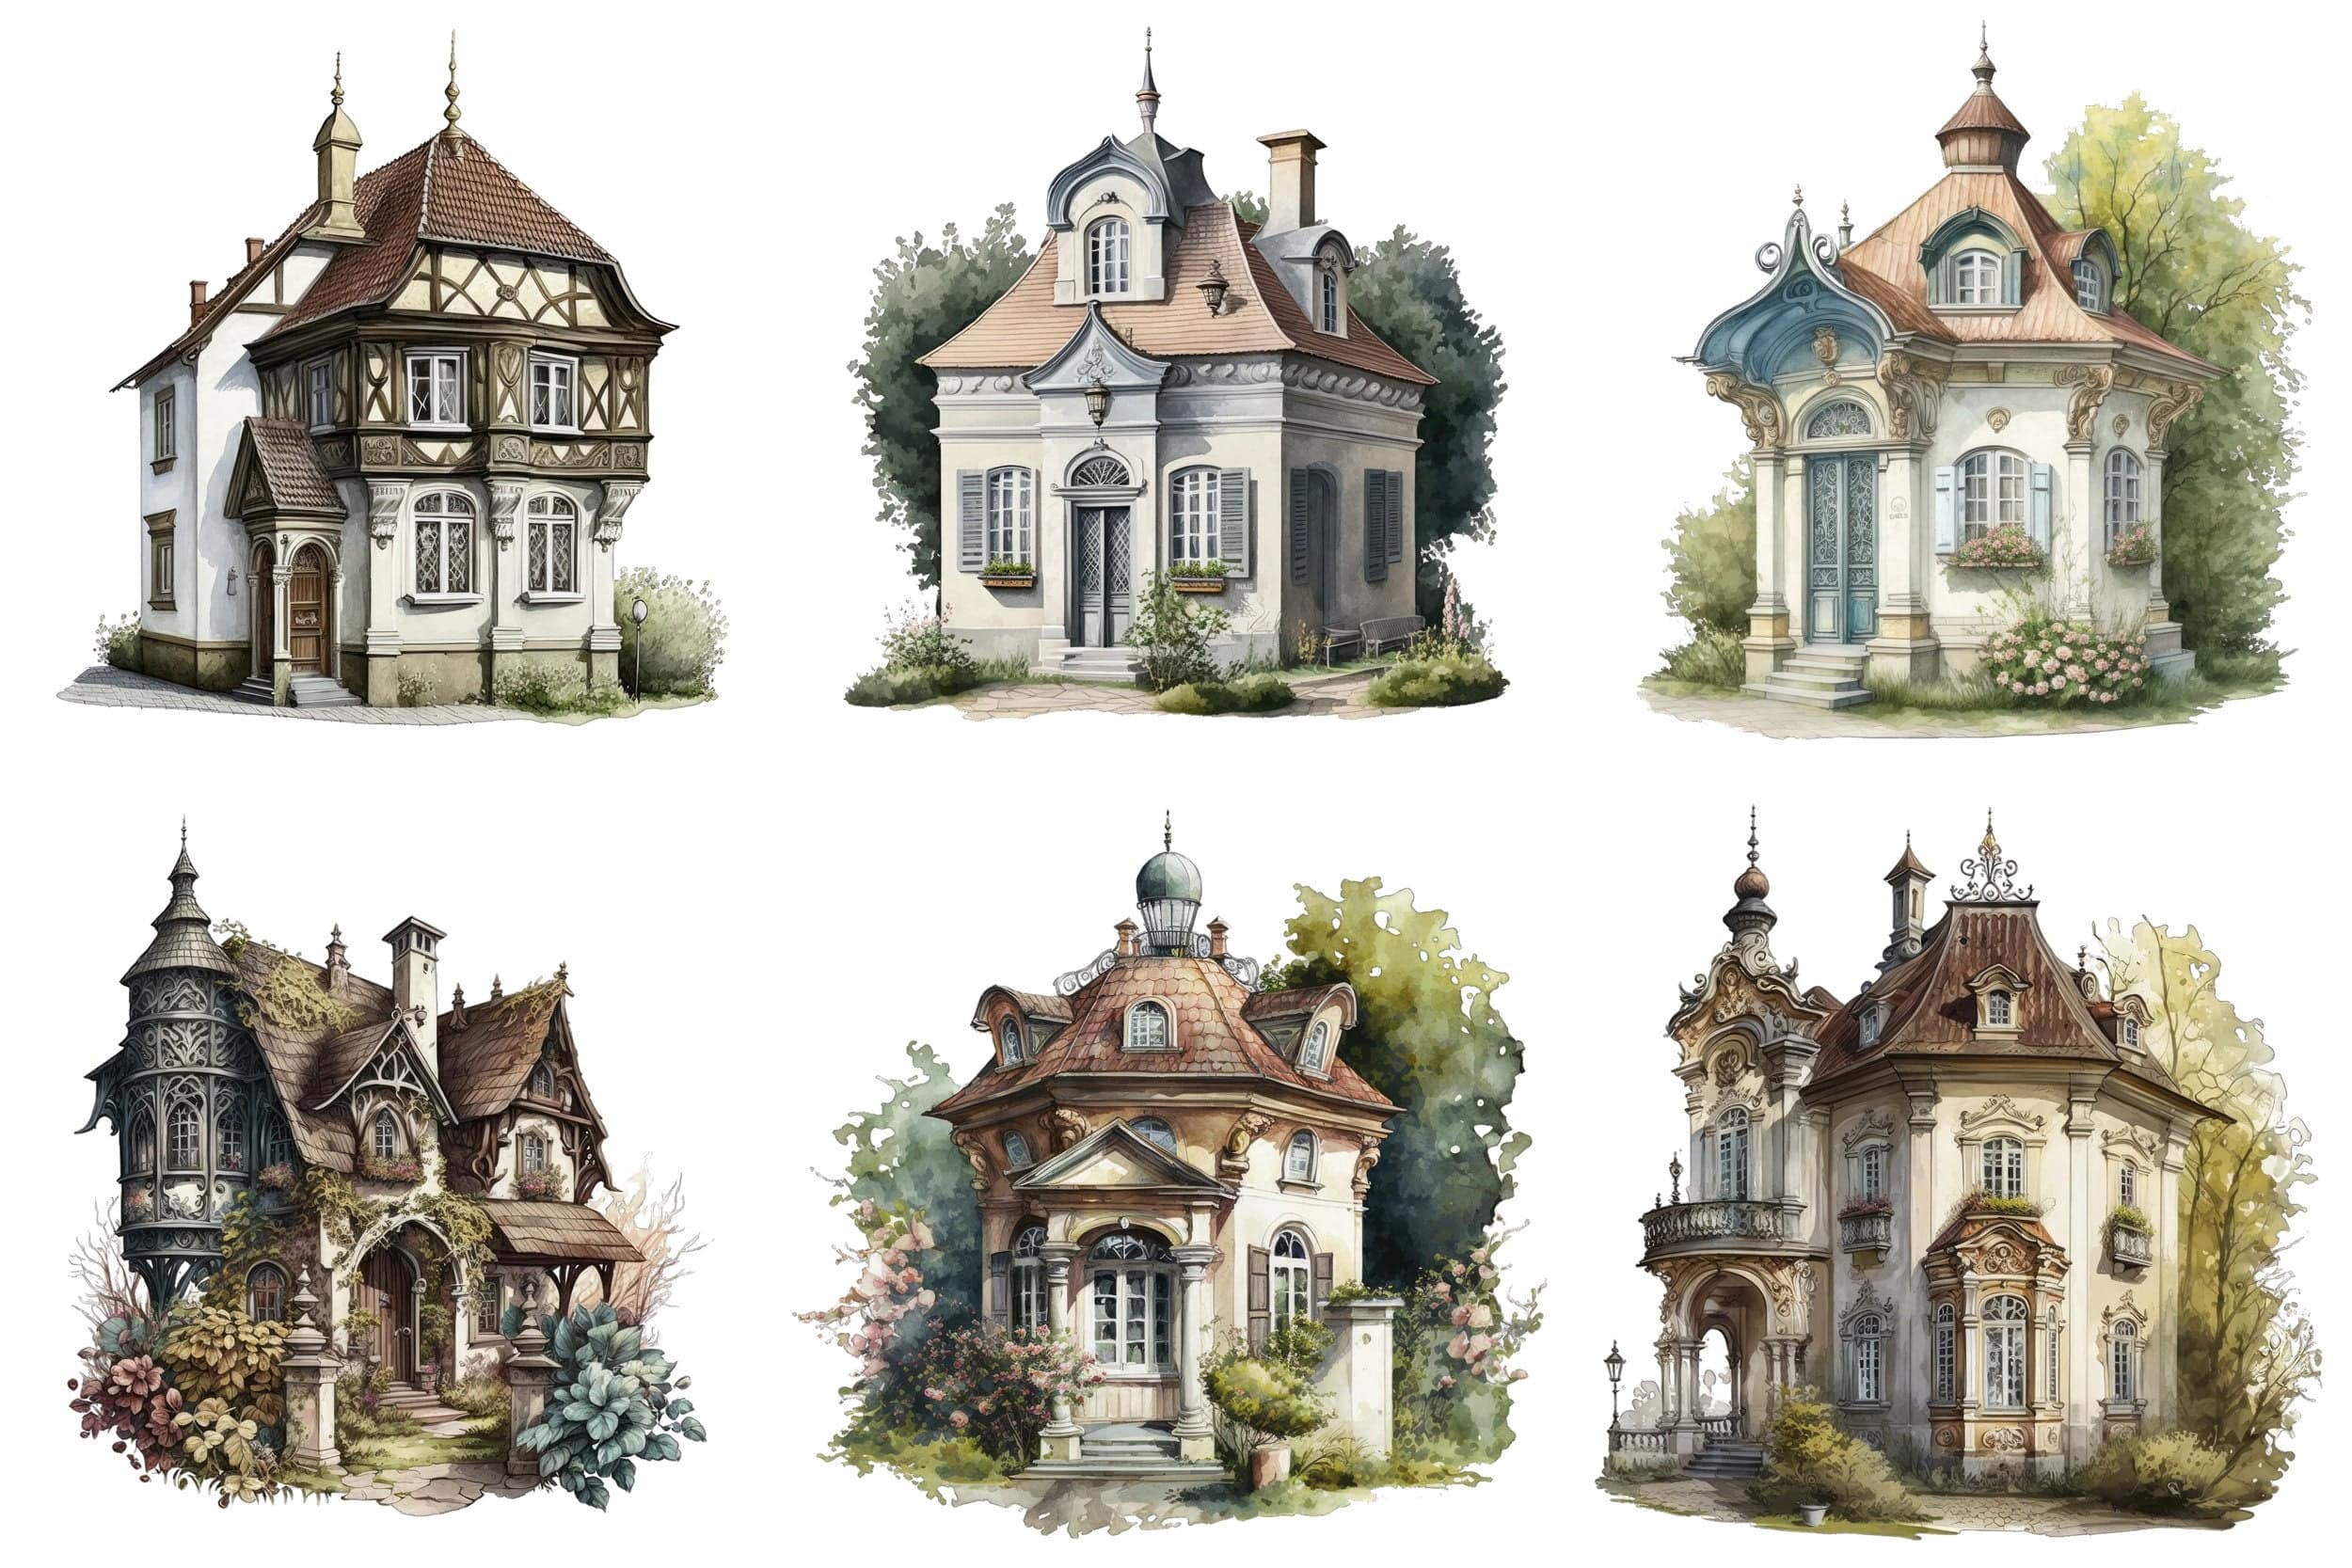 Elegant Baroque Cottage Watercolor Set - 65 Transparent Images for Your Creative Projects Digital Download Sumobundle